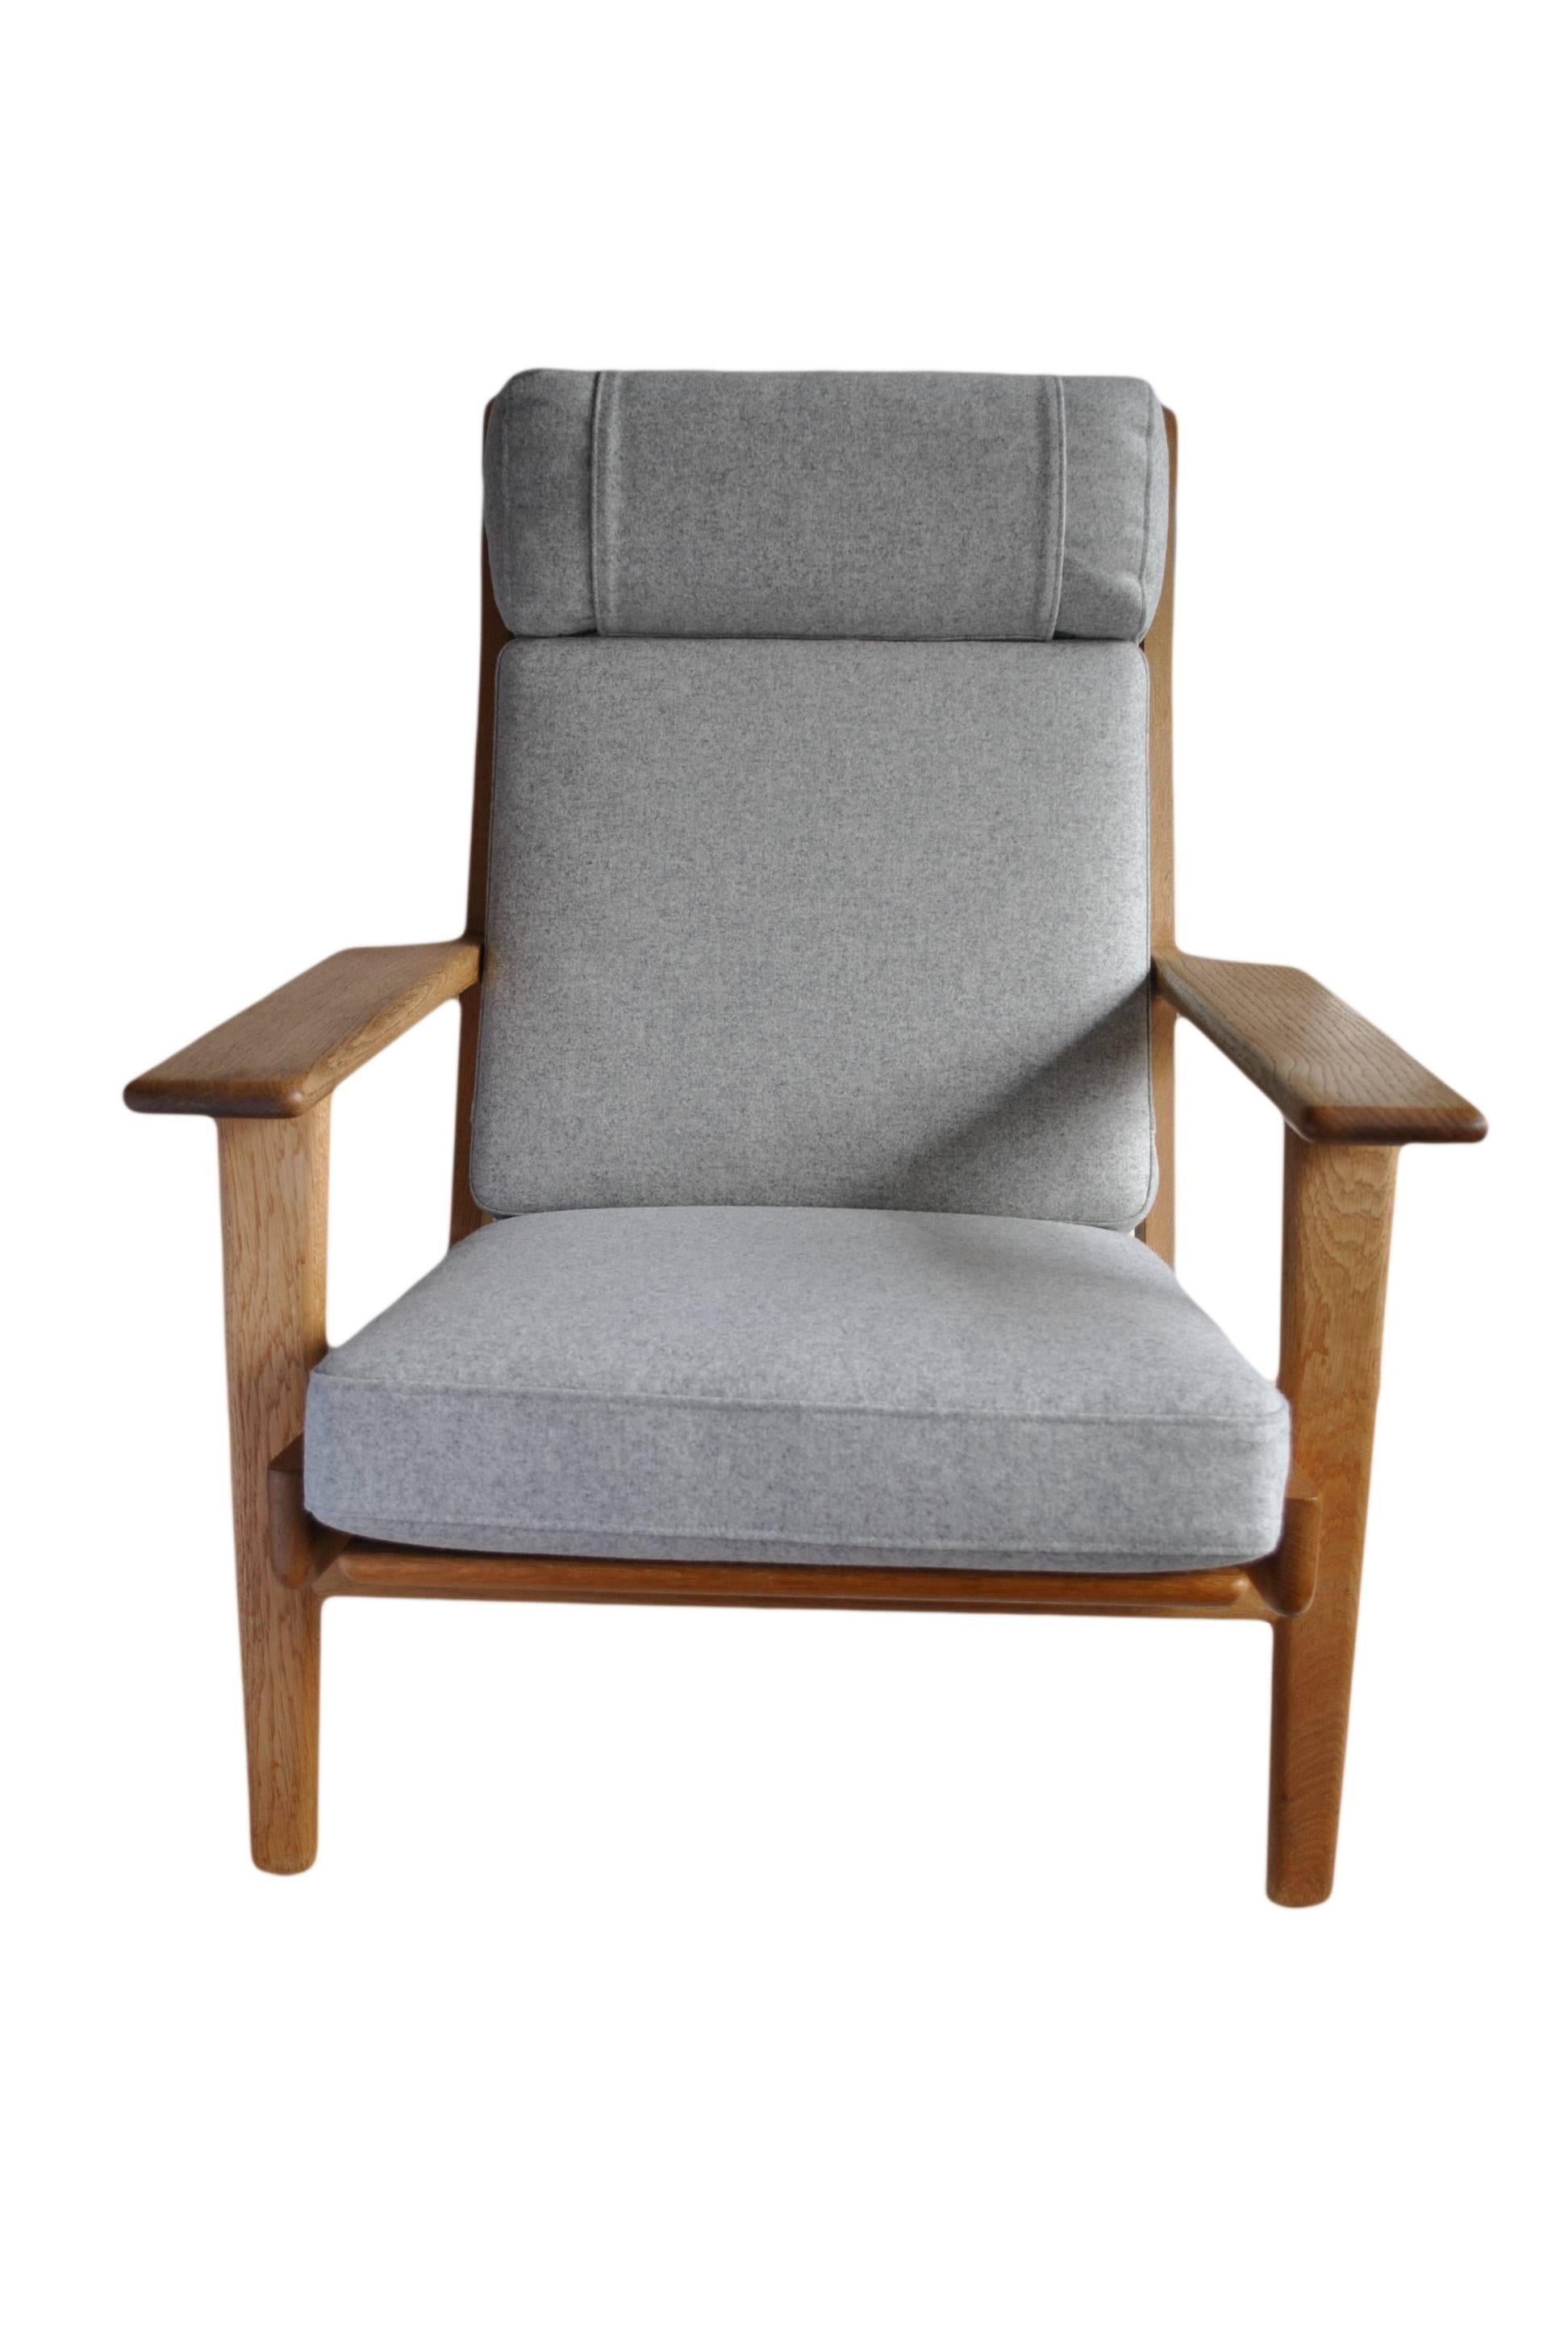 Hans Wegner GE290 Lounge Chair, 1950s Original. Fully refurbished. 1